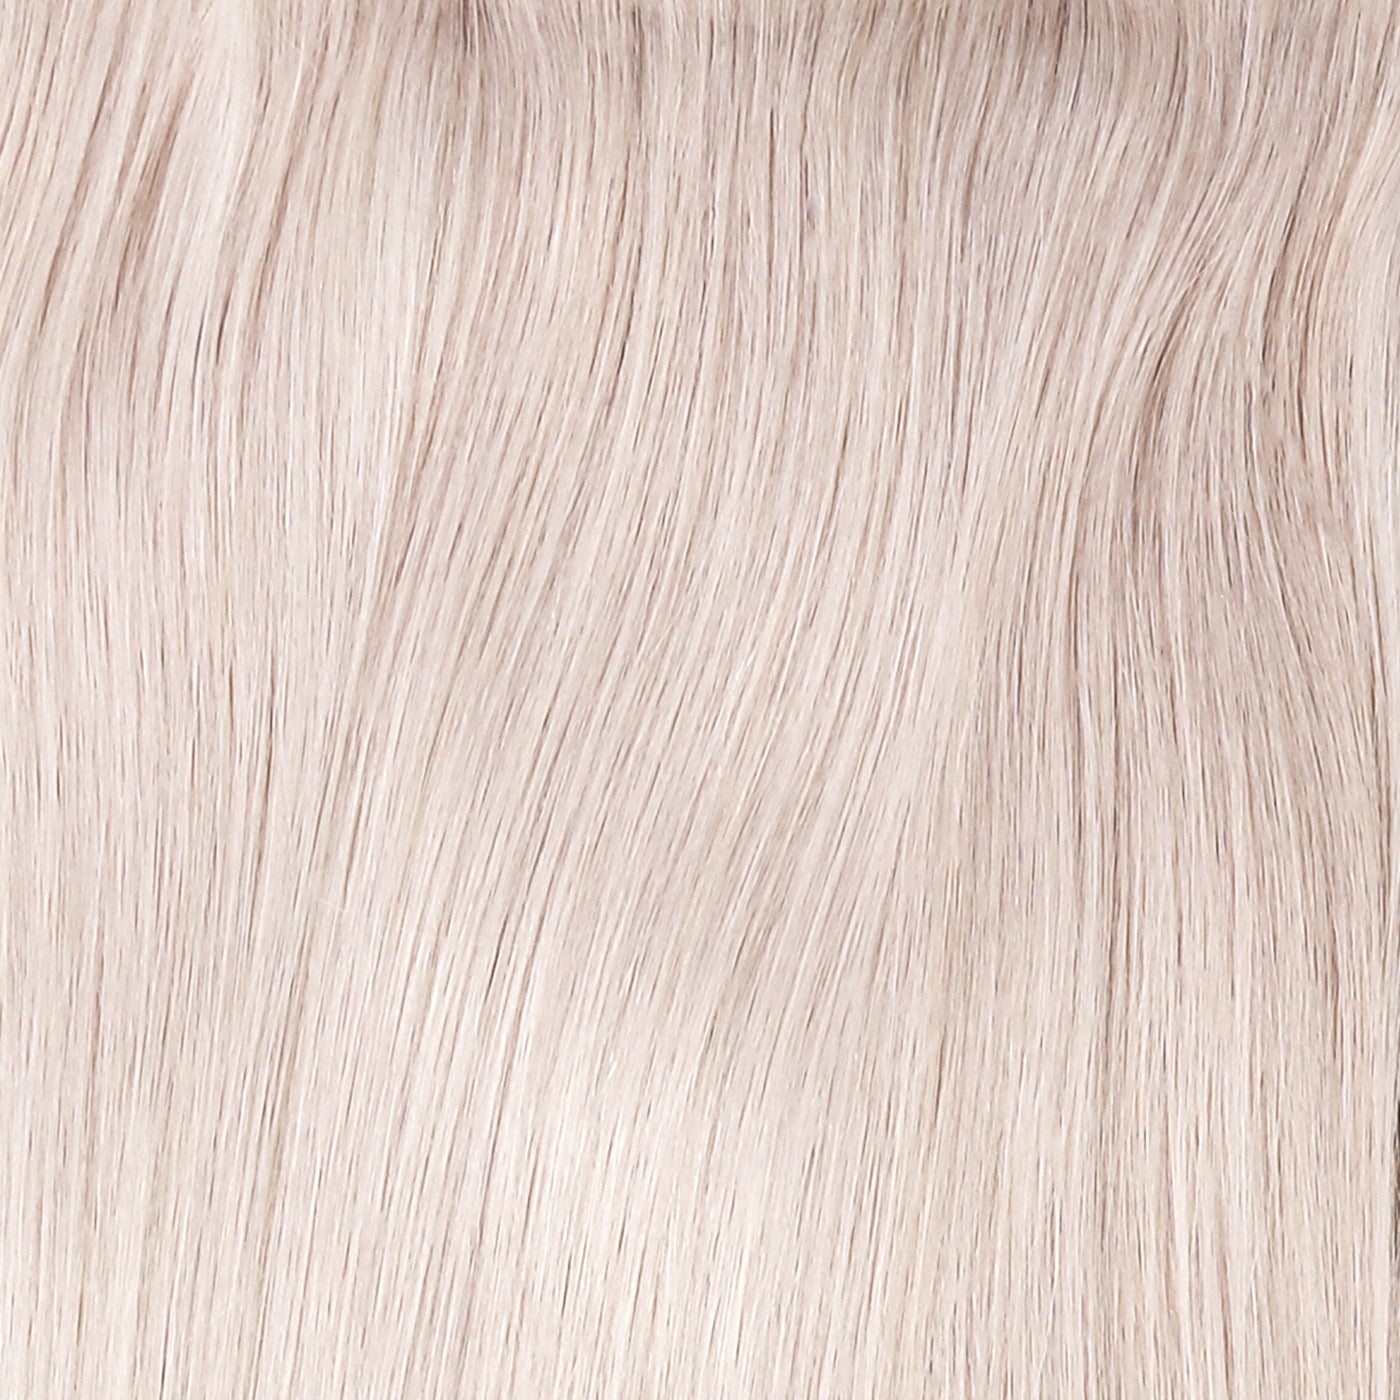 #62 AquaLyna Aura Hair Extension